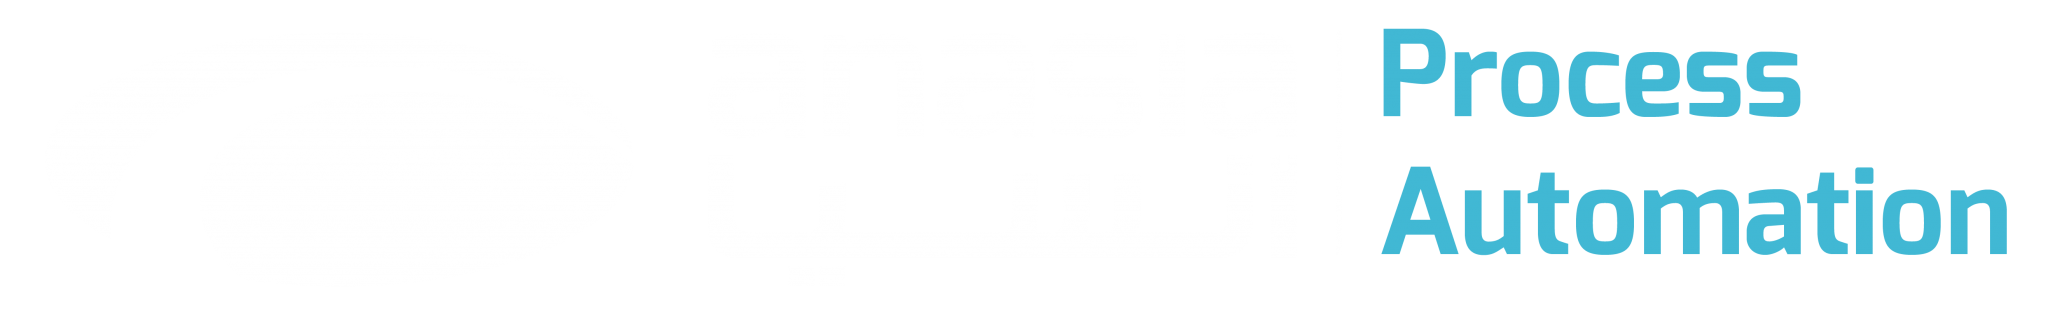 ANASIA-PROCESS-AUTOMATION-Logo-1-2048x331